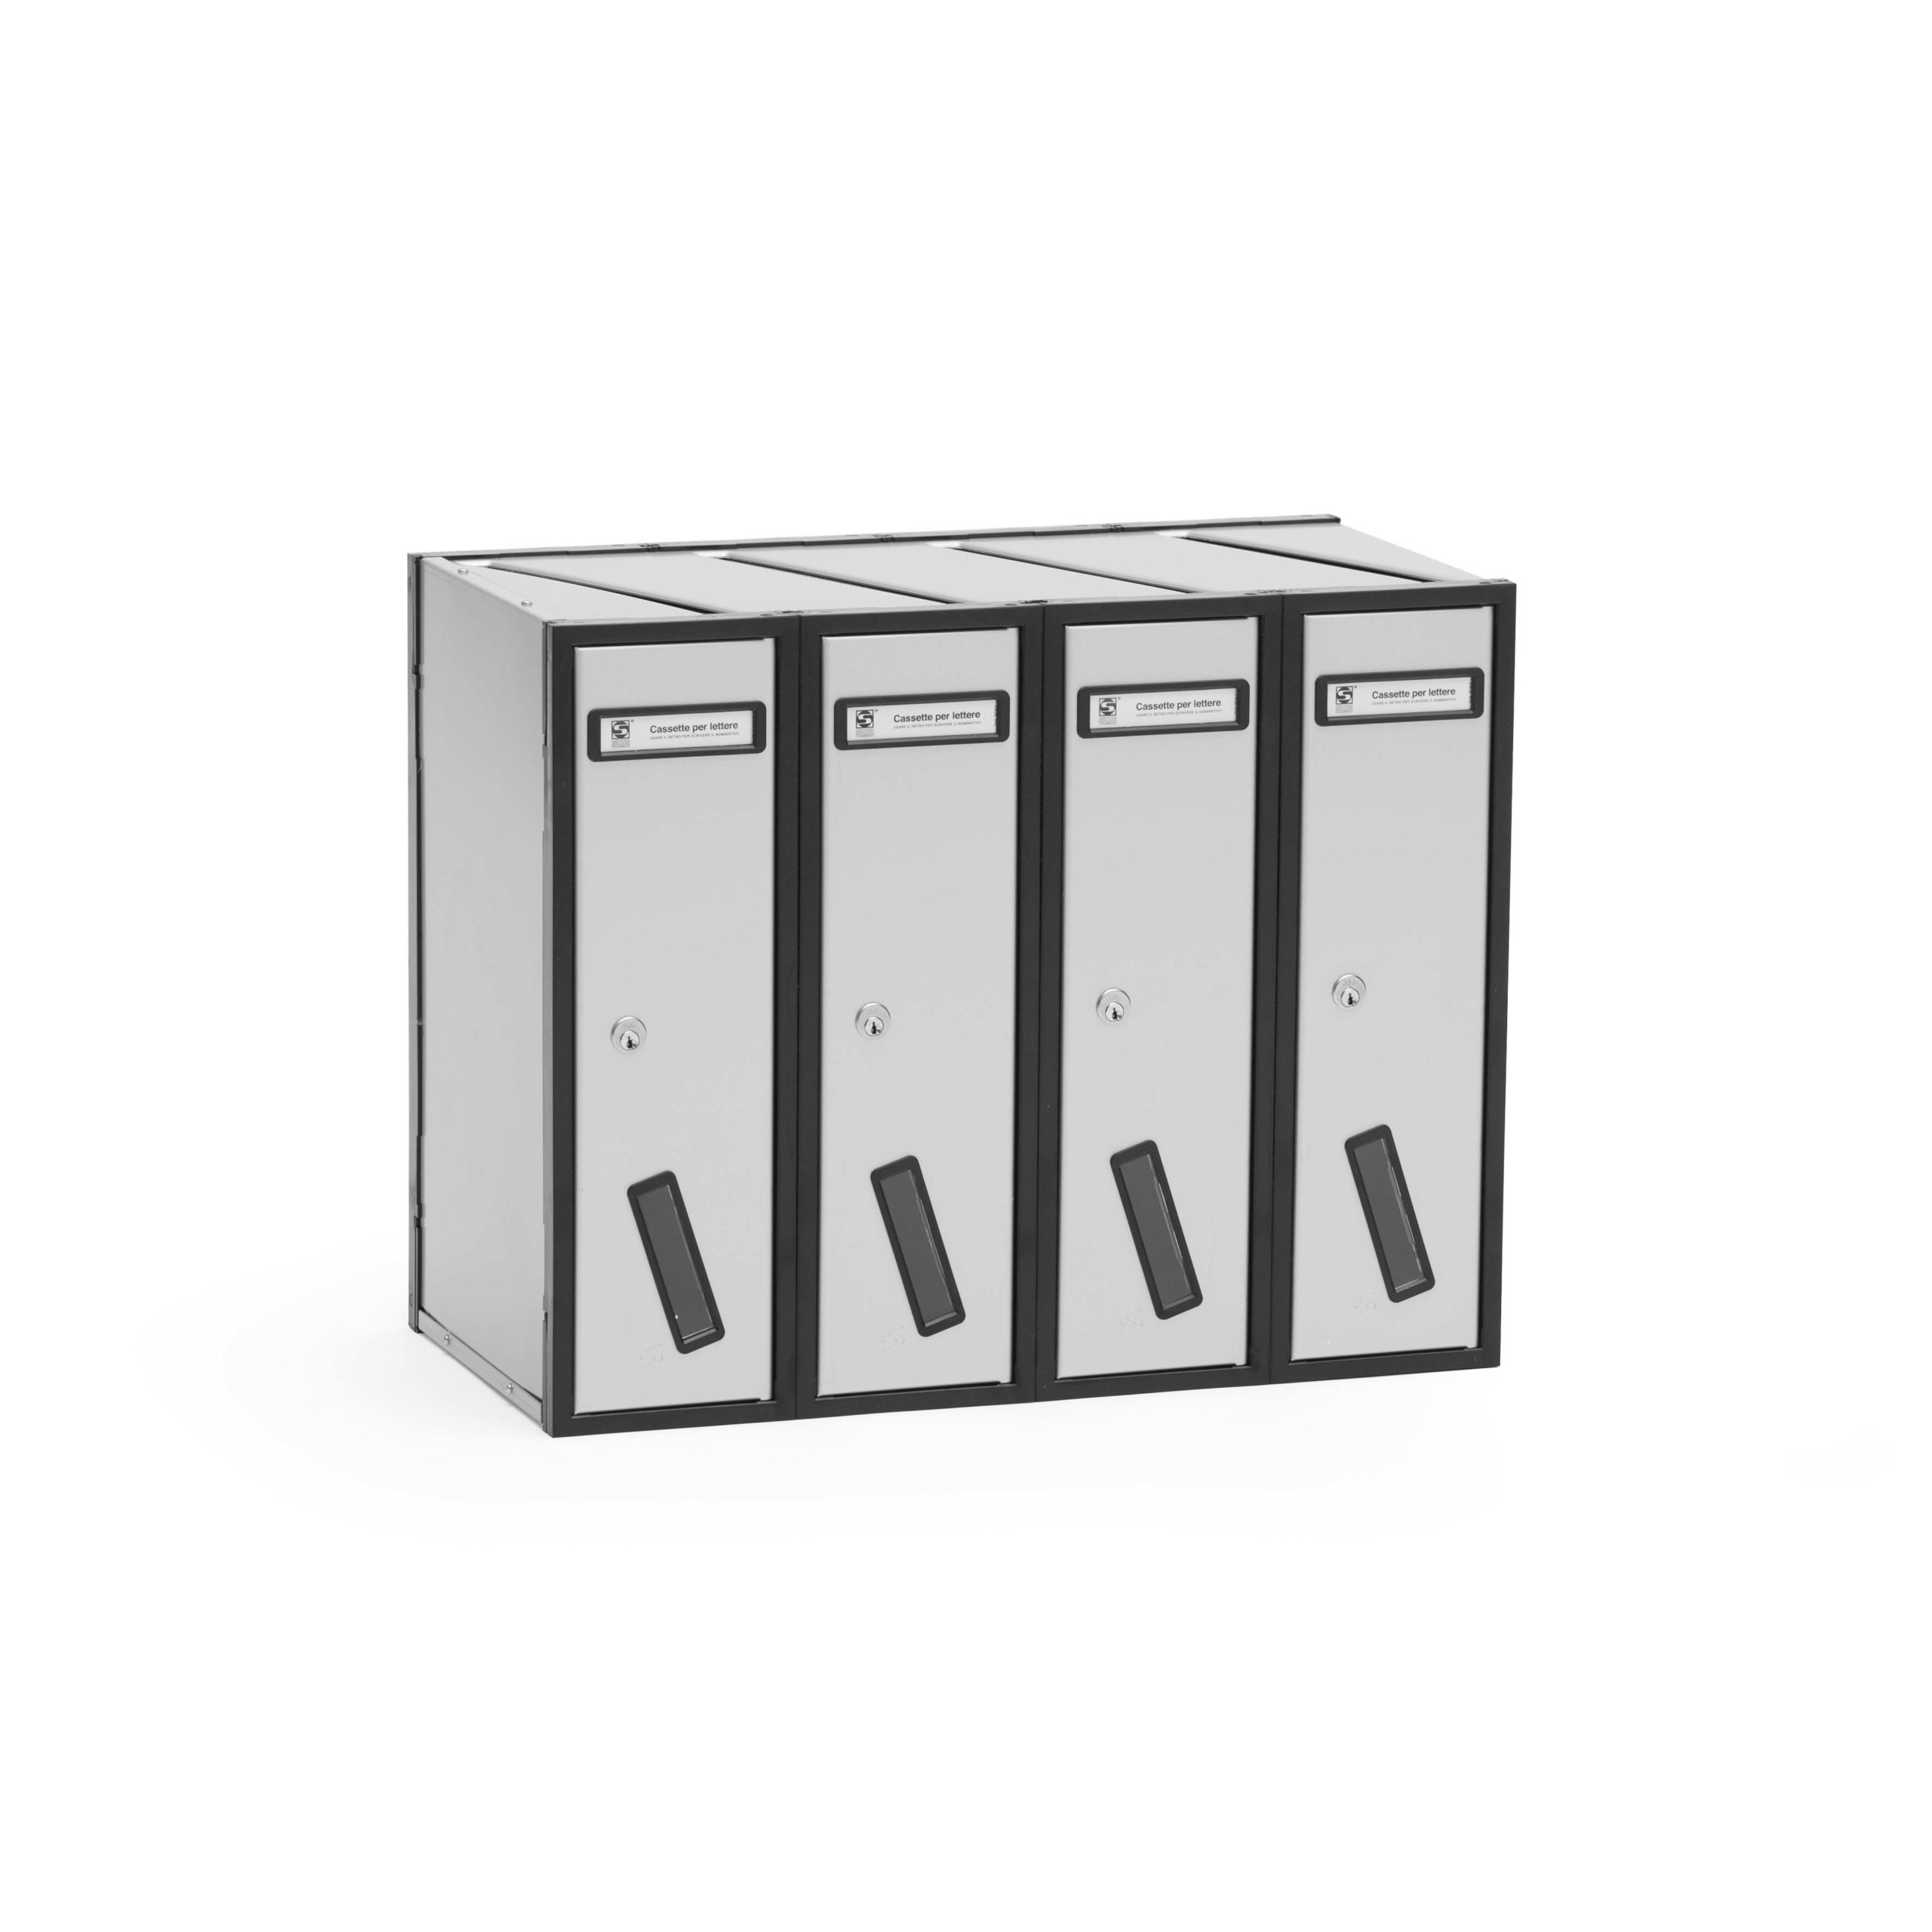 Standard modular letterbox units SC5V – 4 letterboxes